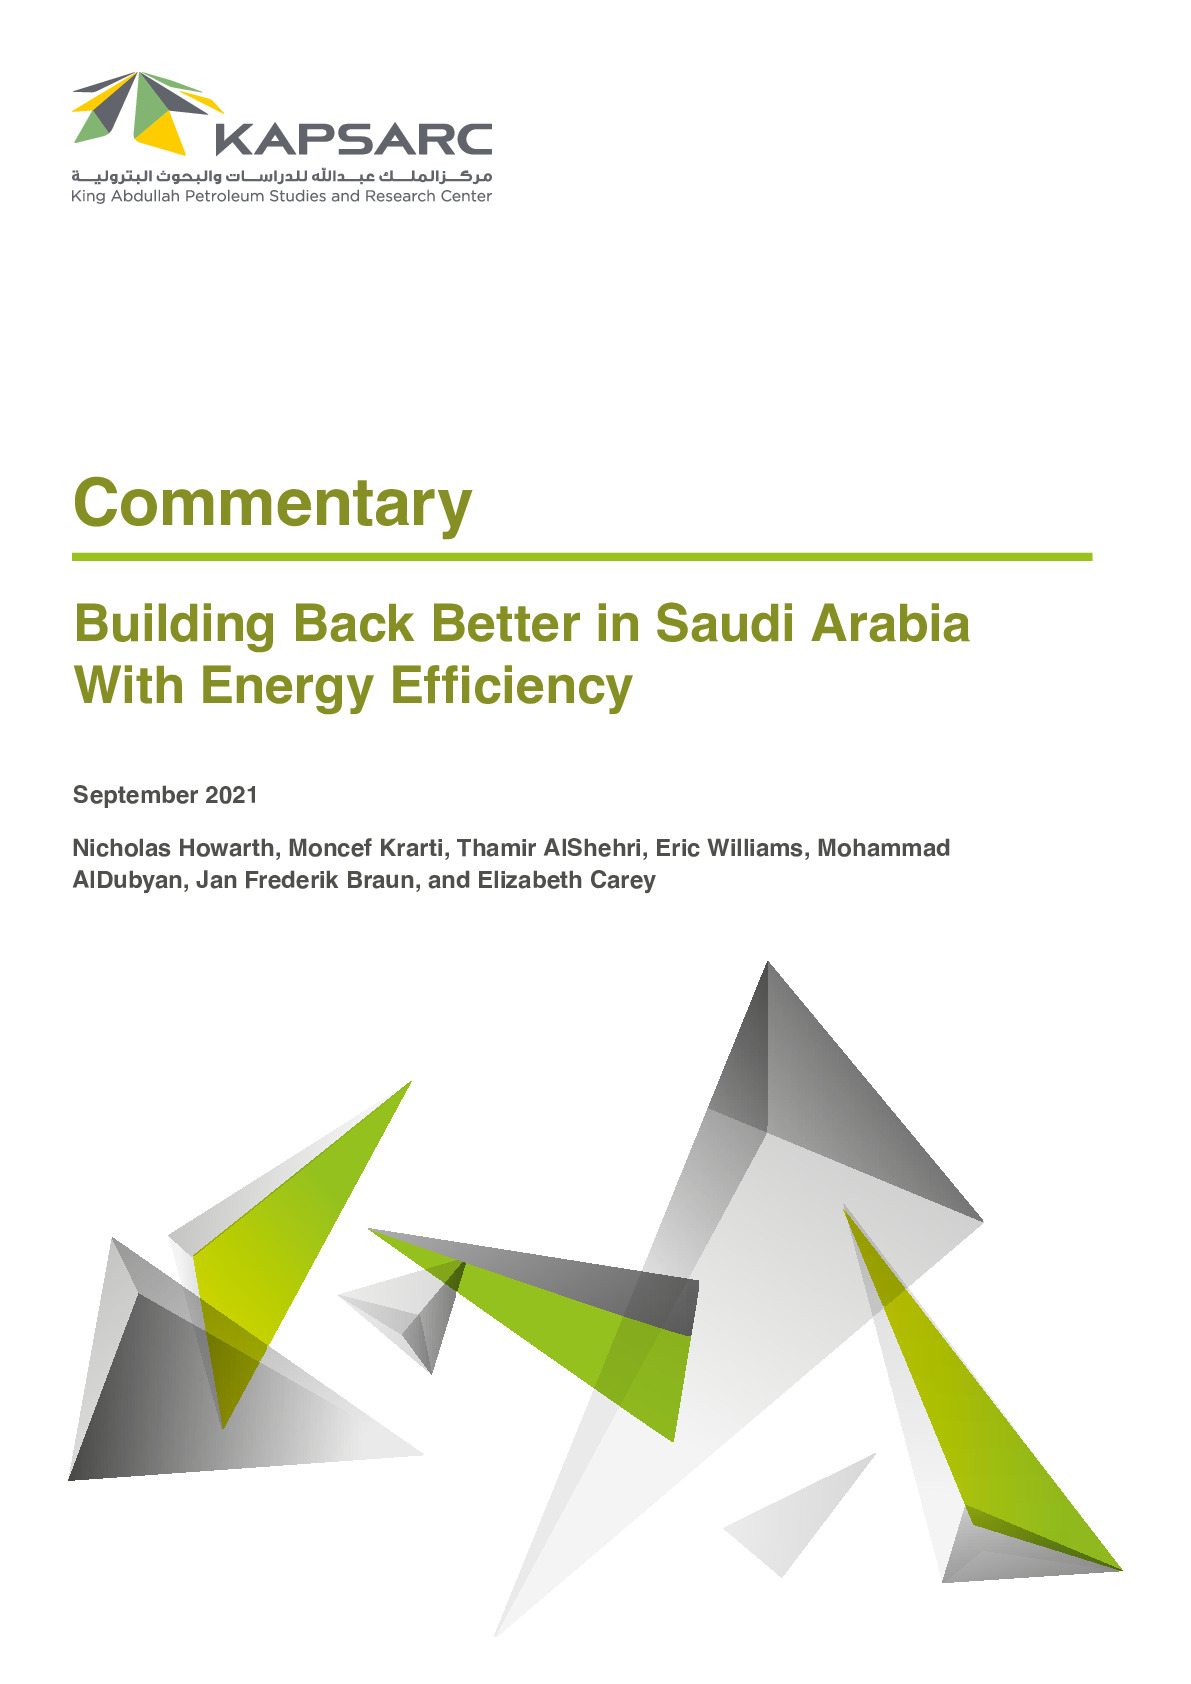 Building Back Better in Saudi Arabia With Energy Efficiency